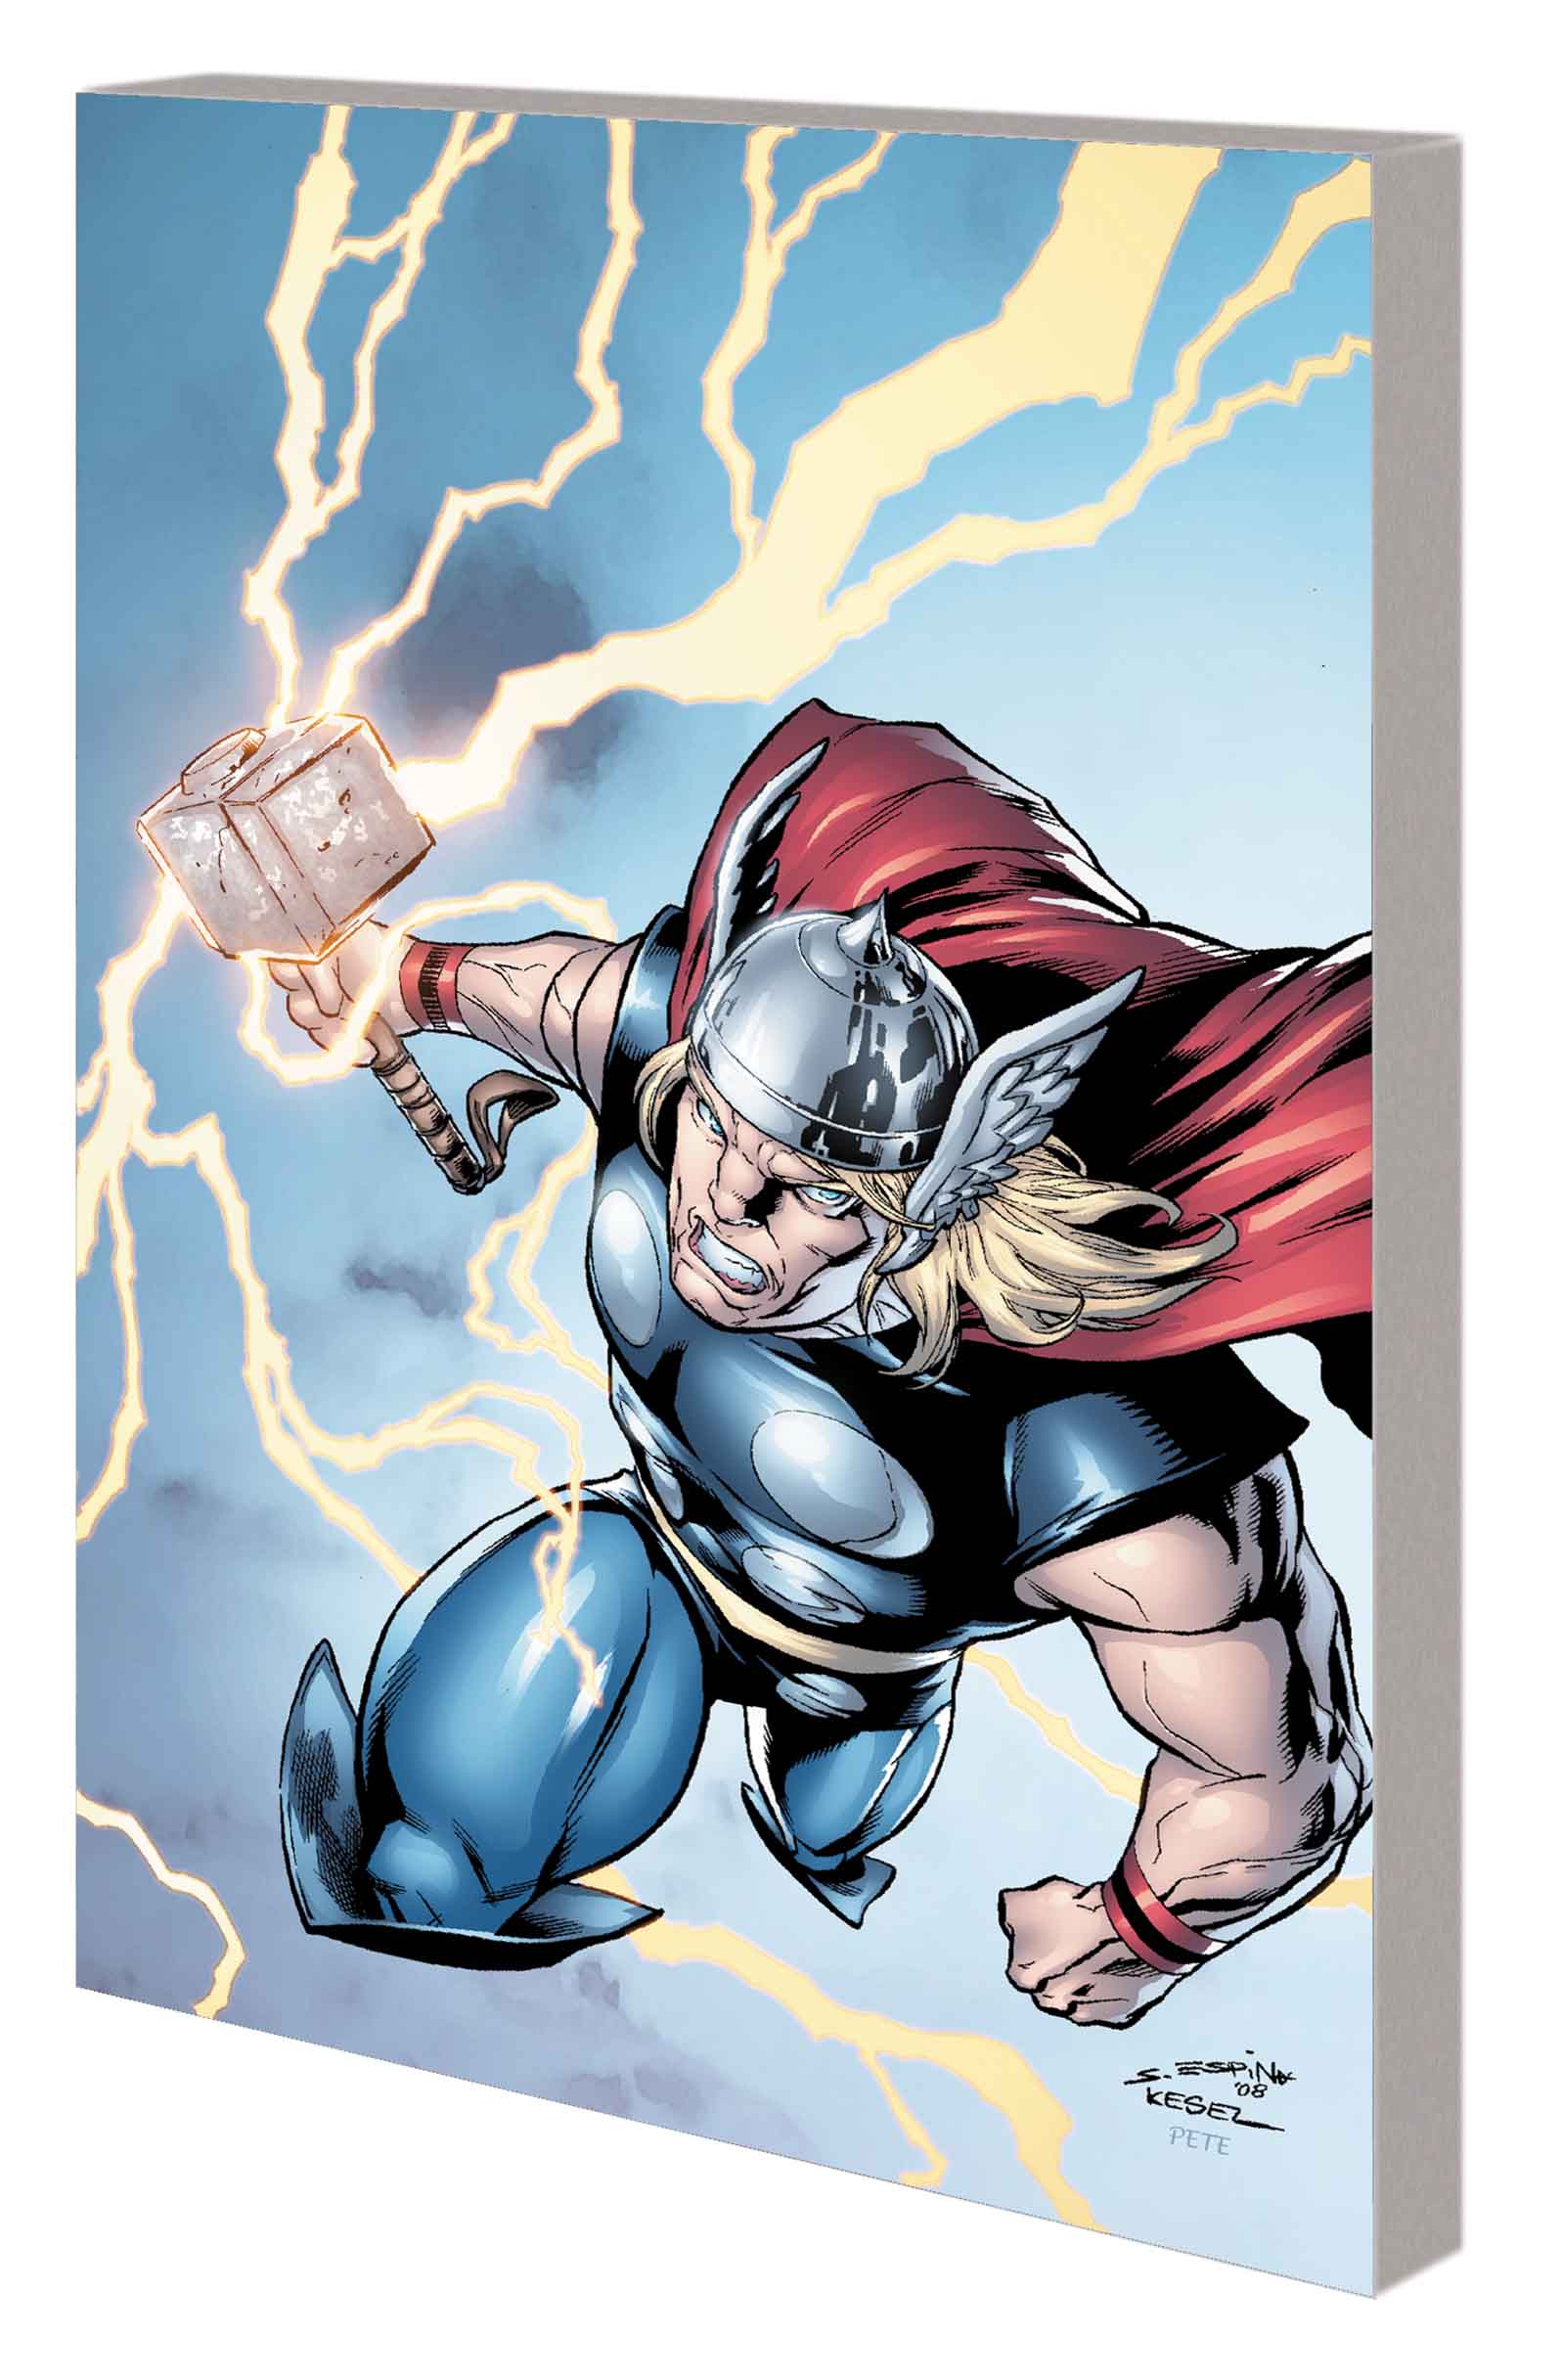 Marvel Universe Thor Comic Reader (2013) #1